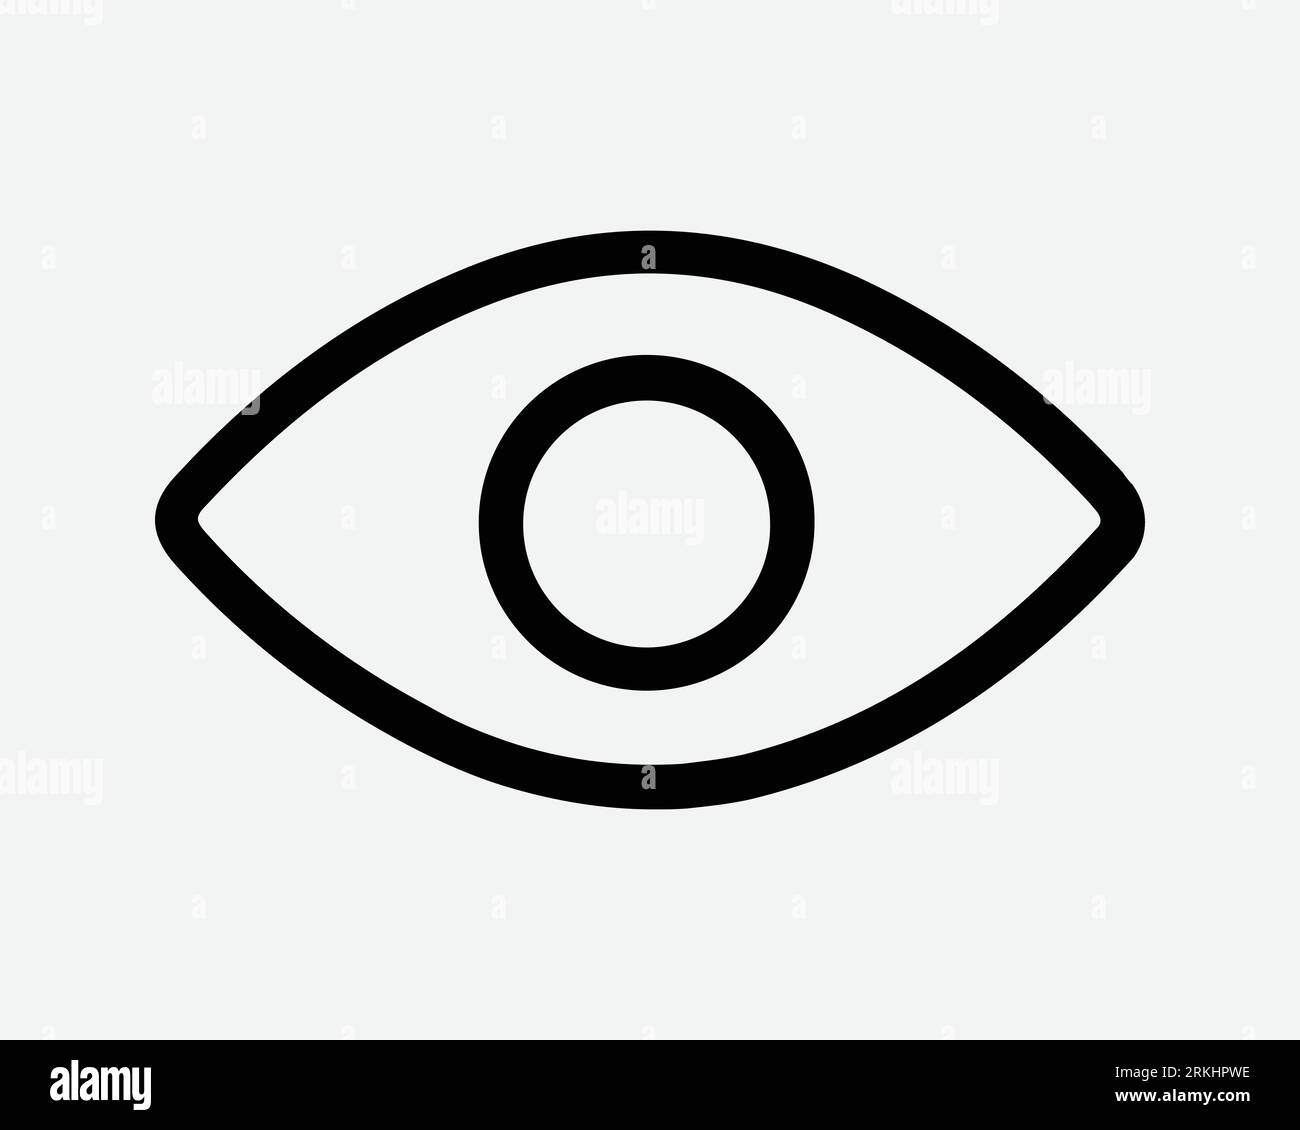 Eye Line Icon Eyesight Sight Watch Watching CCTV Vision Optical Optic One Human Eyeball View Illuminati Spy Look Looking Black Vector Sign Symbol Stock Vector